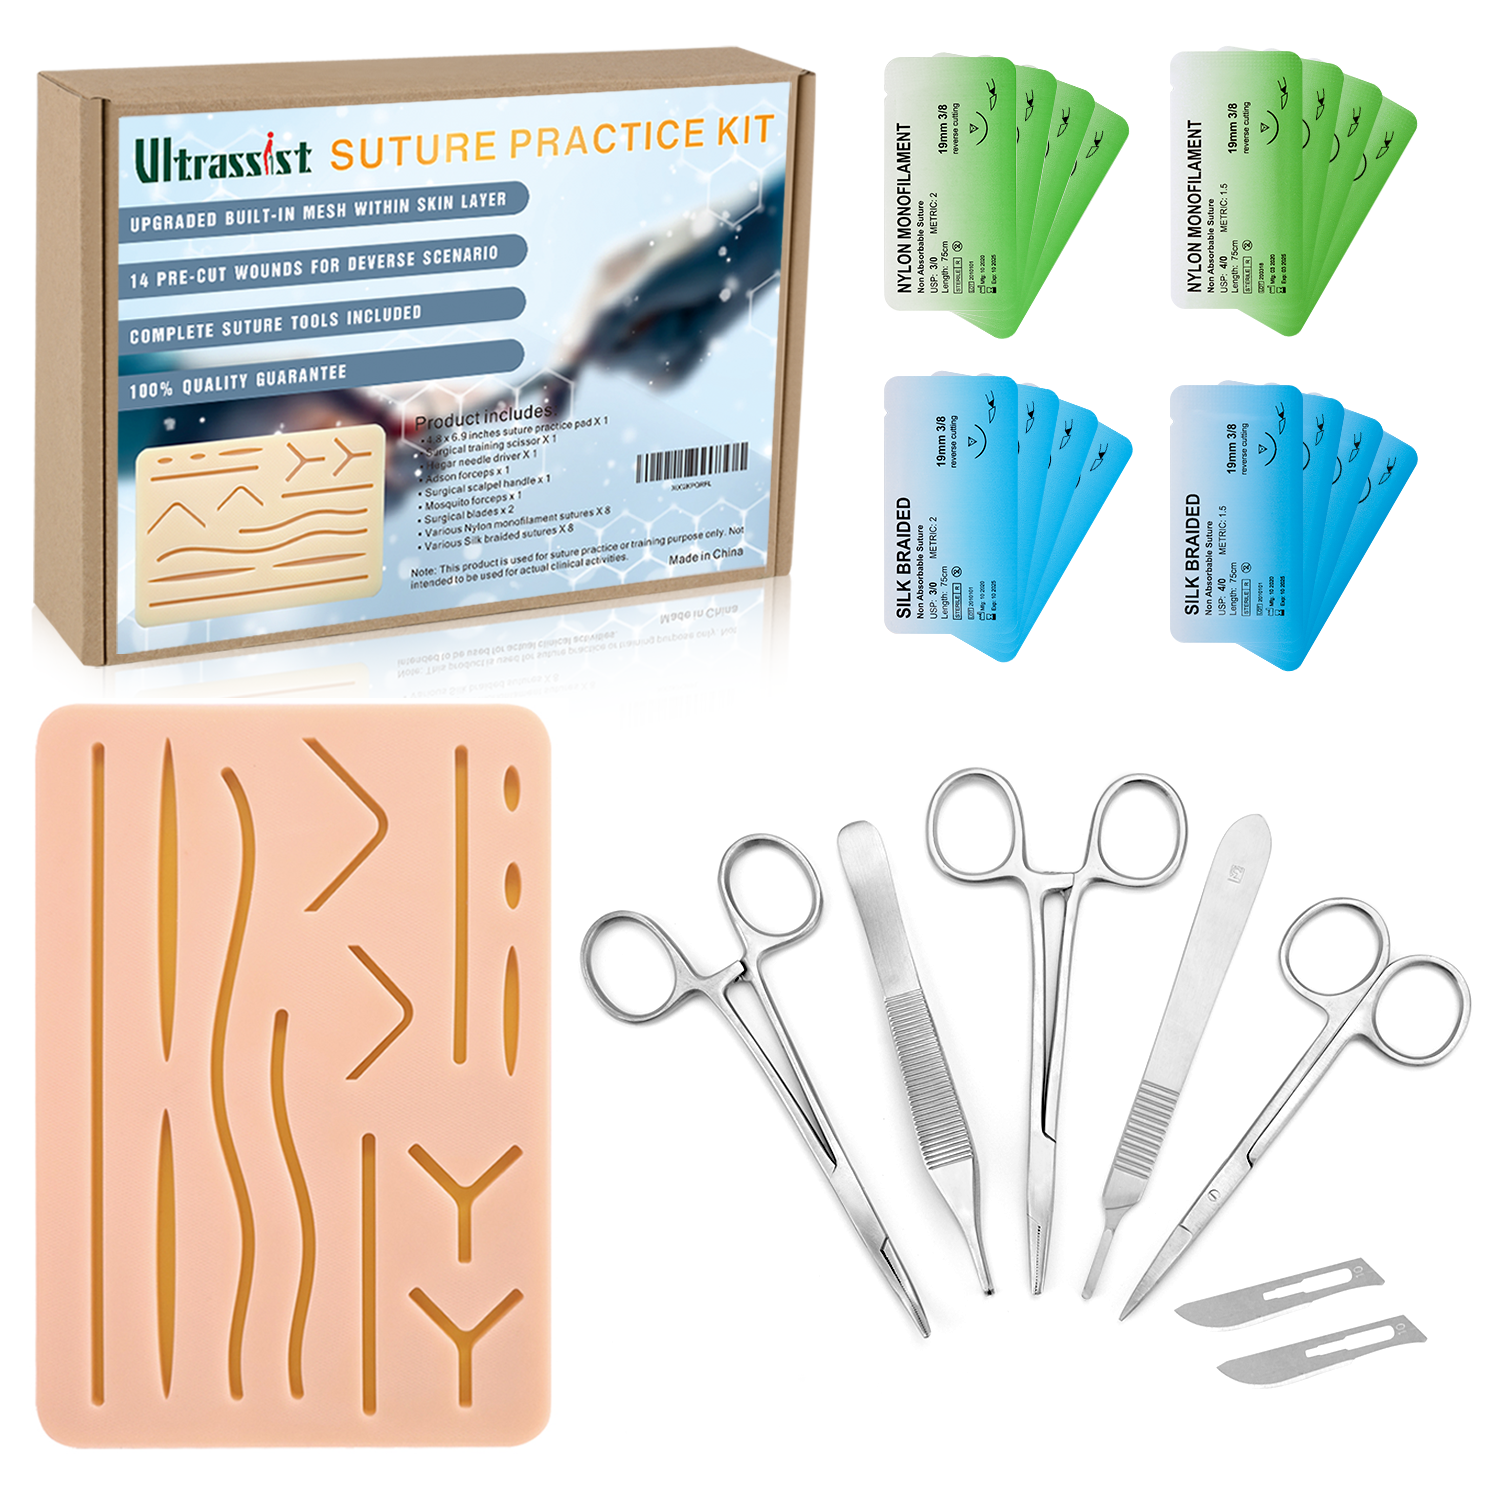 Ultrassist Veterinary Suture Kit - Skin Practice Pad for Vet Students